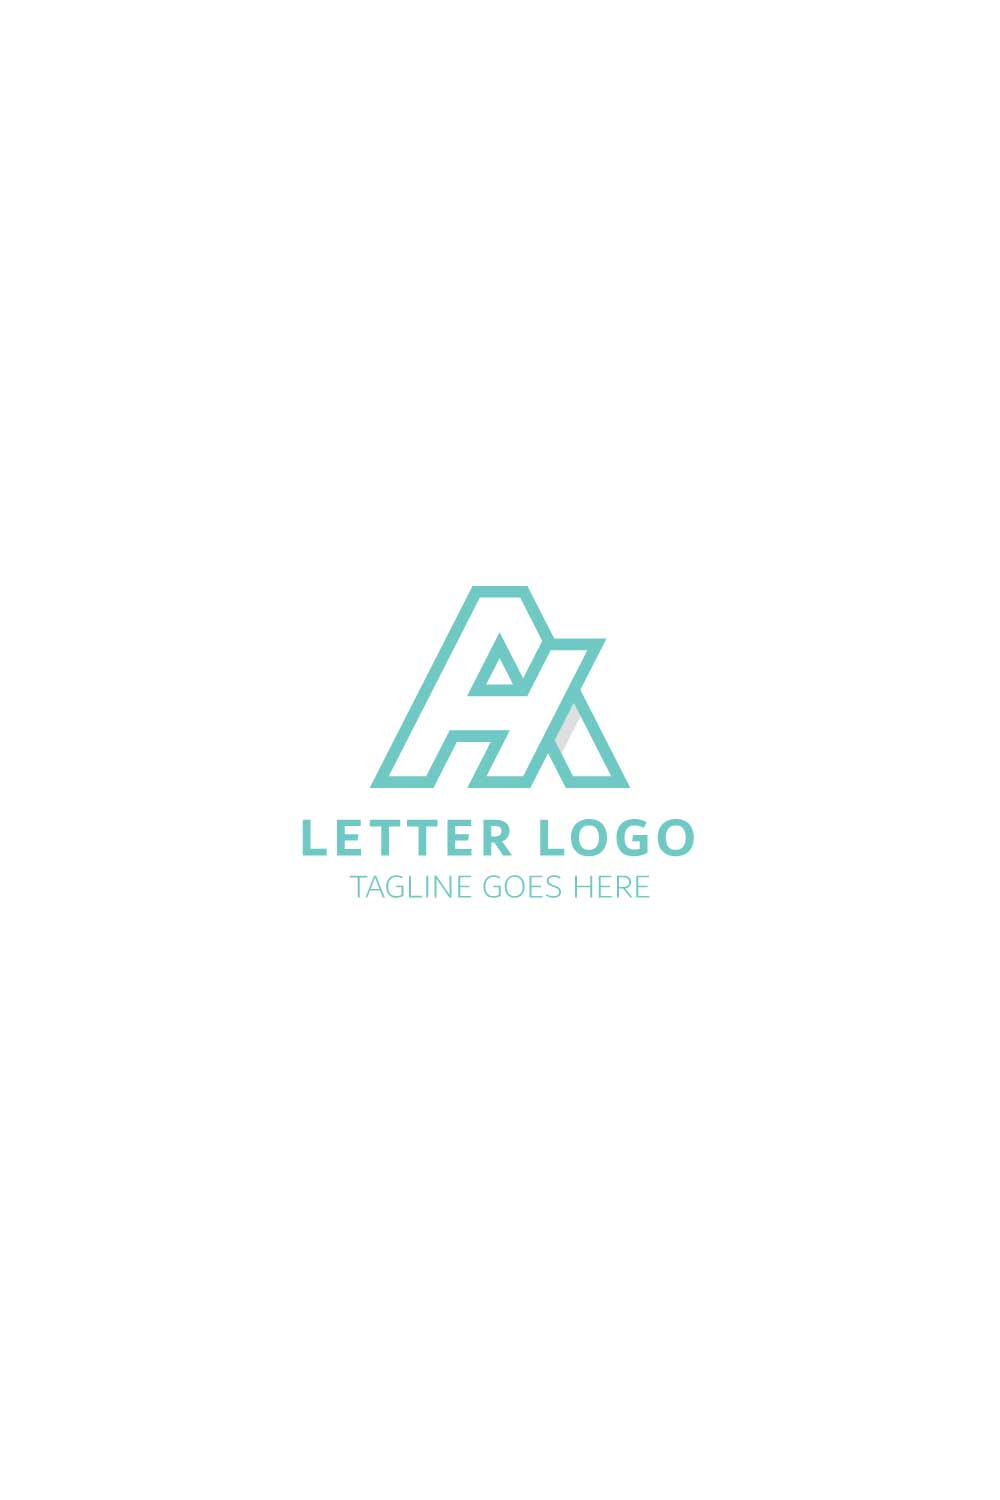 Professional letter AH logo design pinterest preview image.